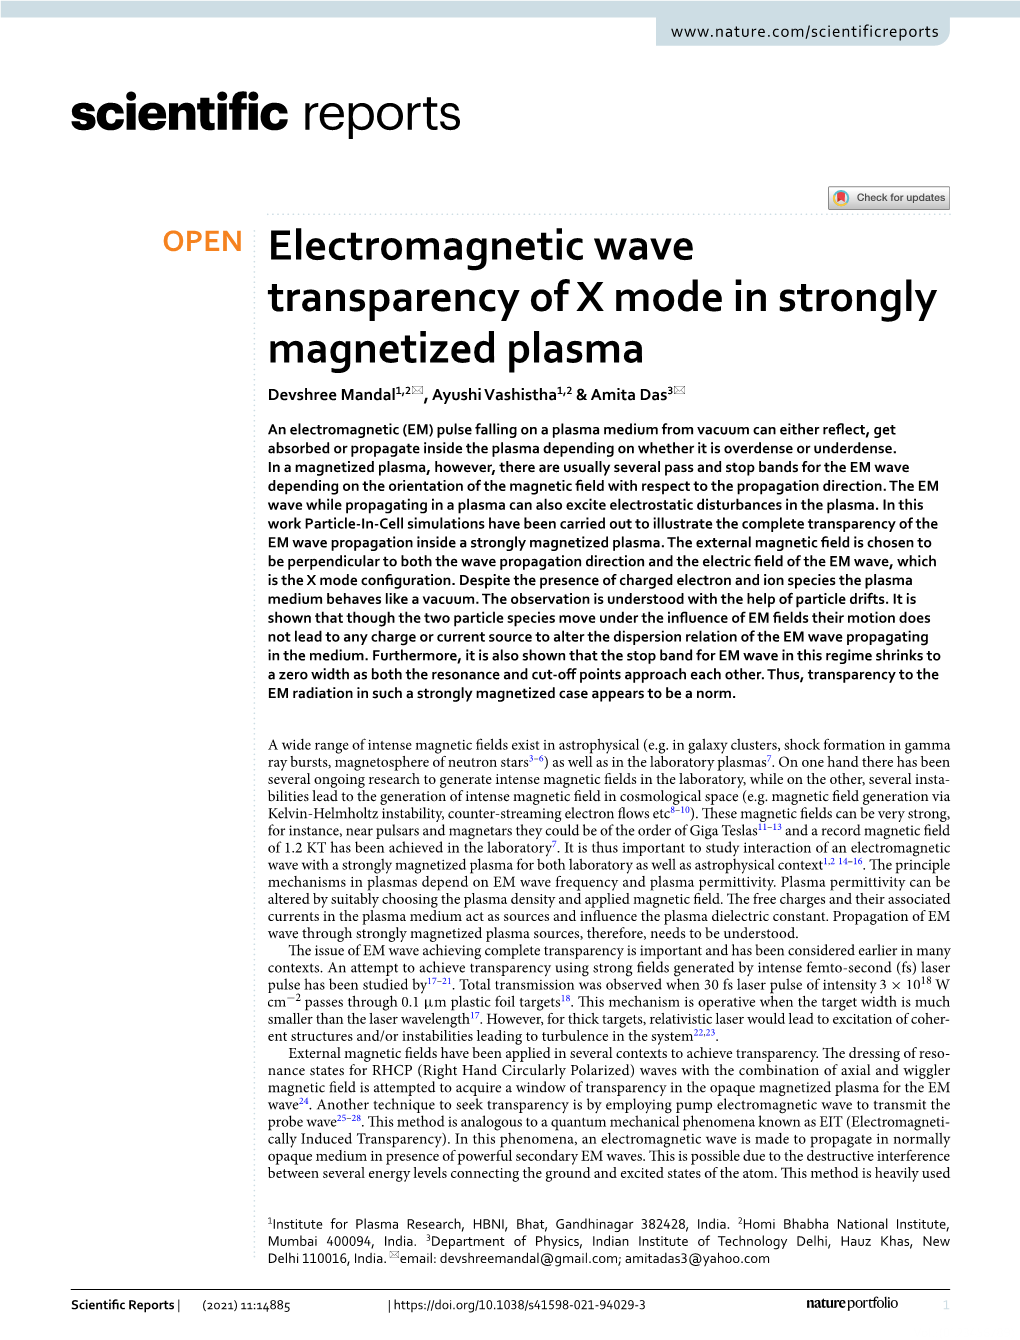 Electromagnetic Wave Transparency of X Mode in Strongly Magnetized Plasma Devshree Mandal1,2*, Ayushi Vashistha1,2 & Amita Das3*